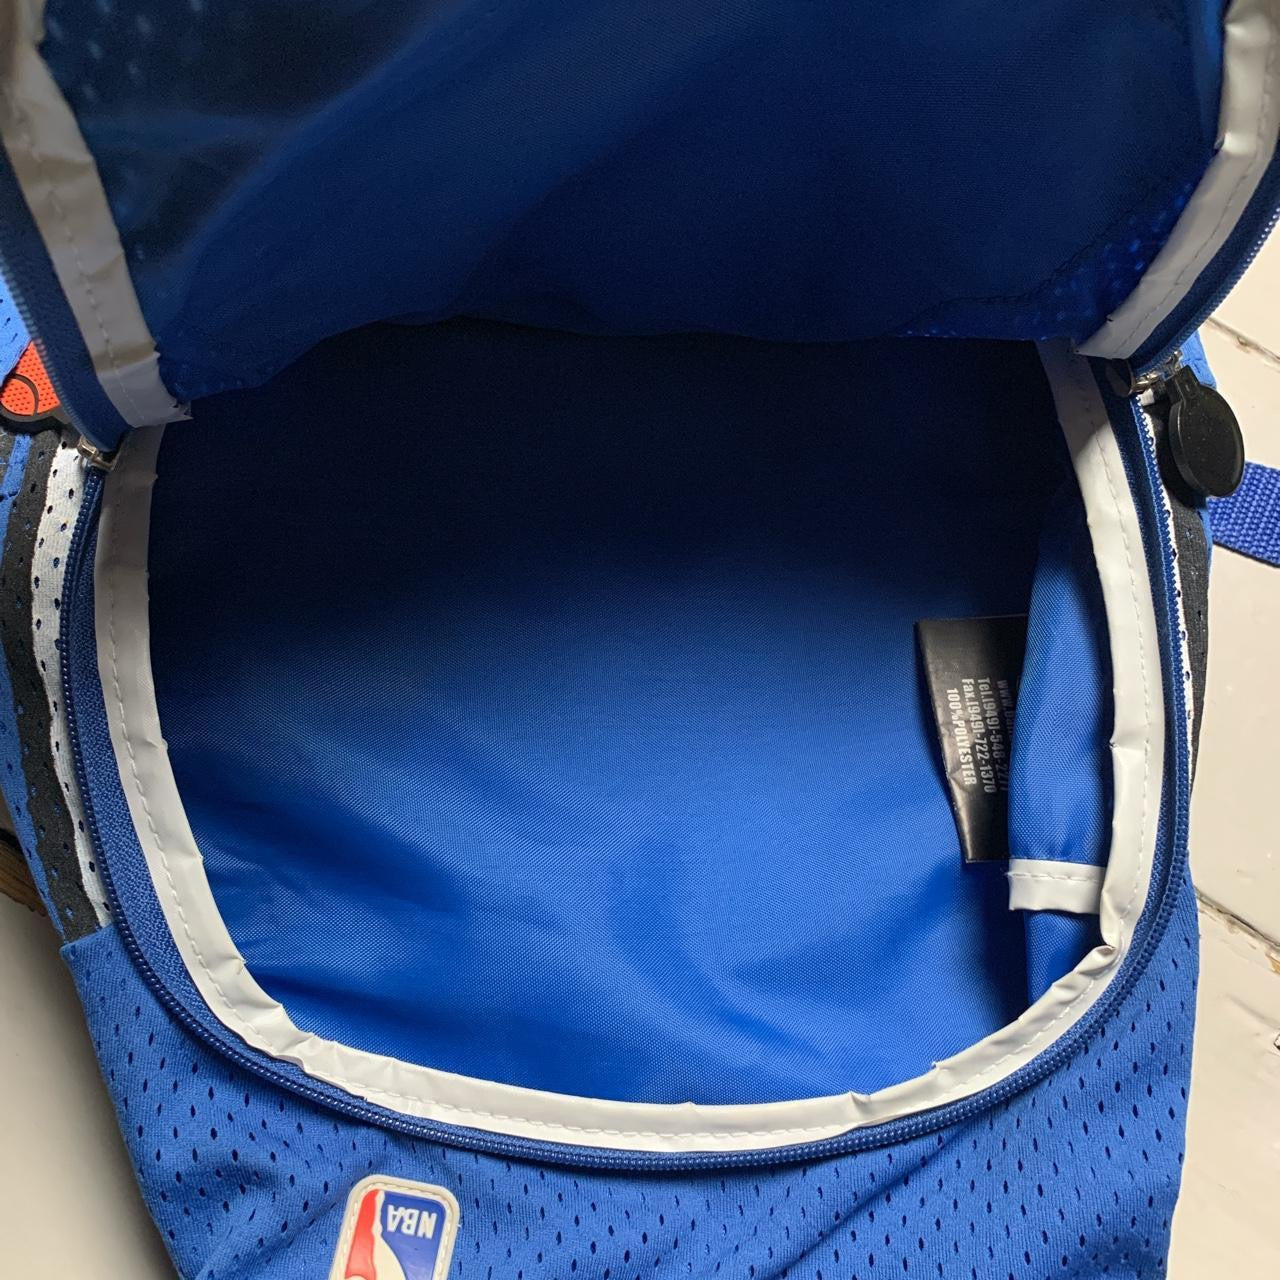 Orlando Magic Basketball Bag